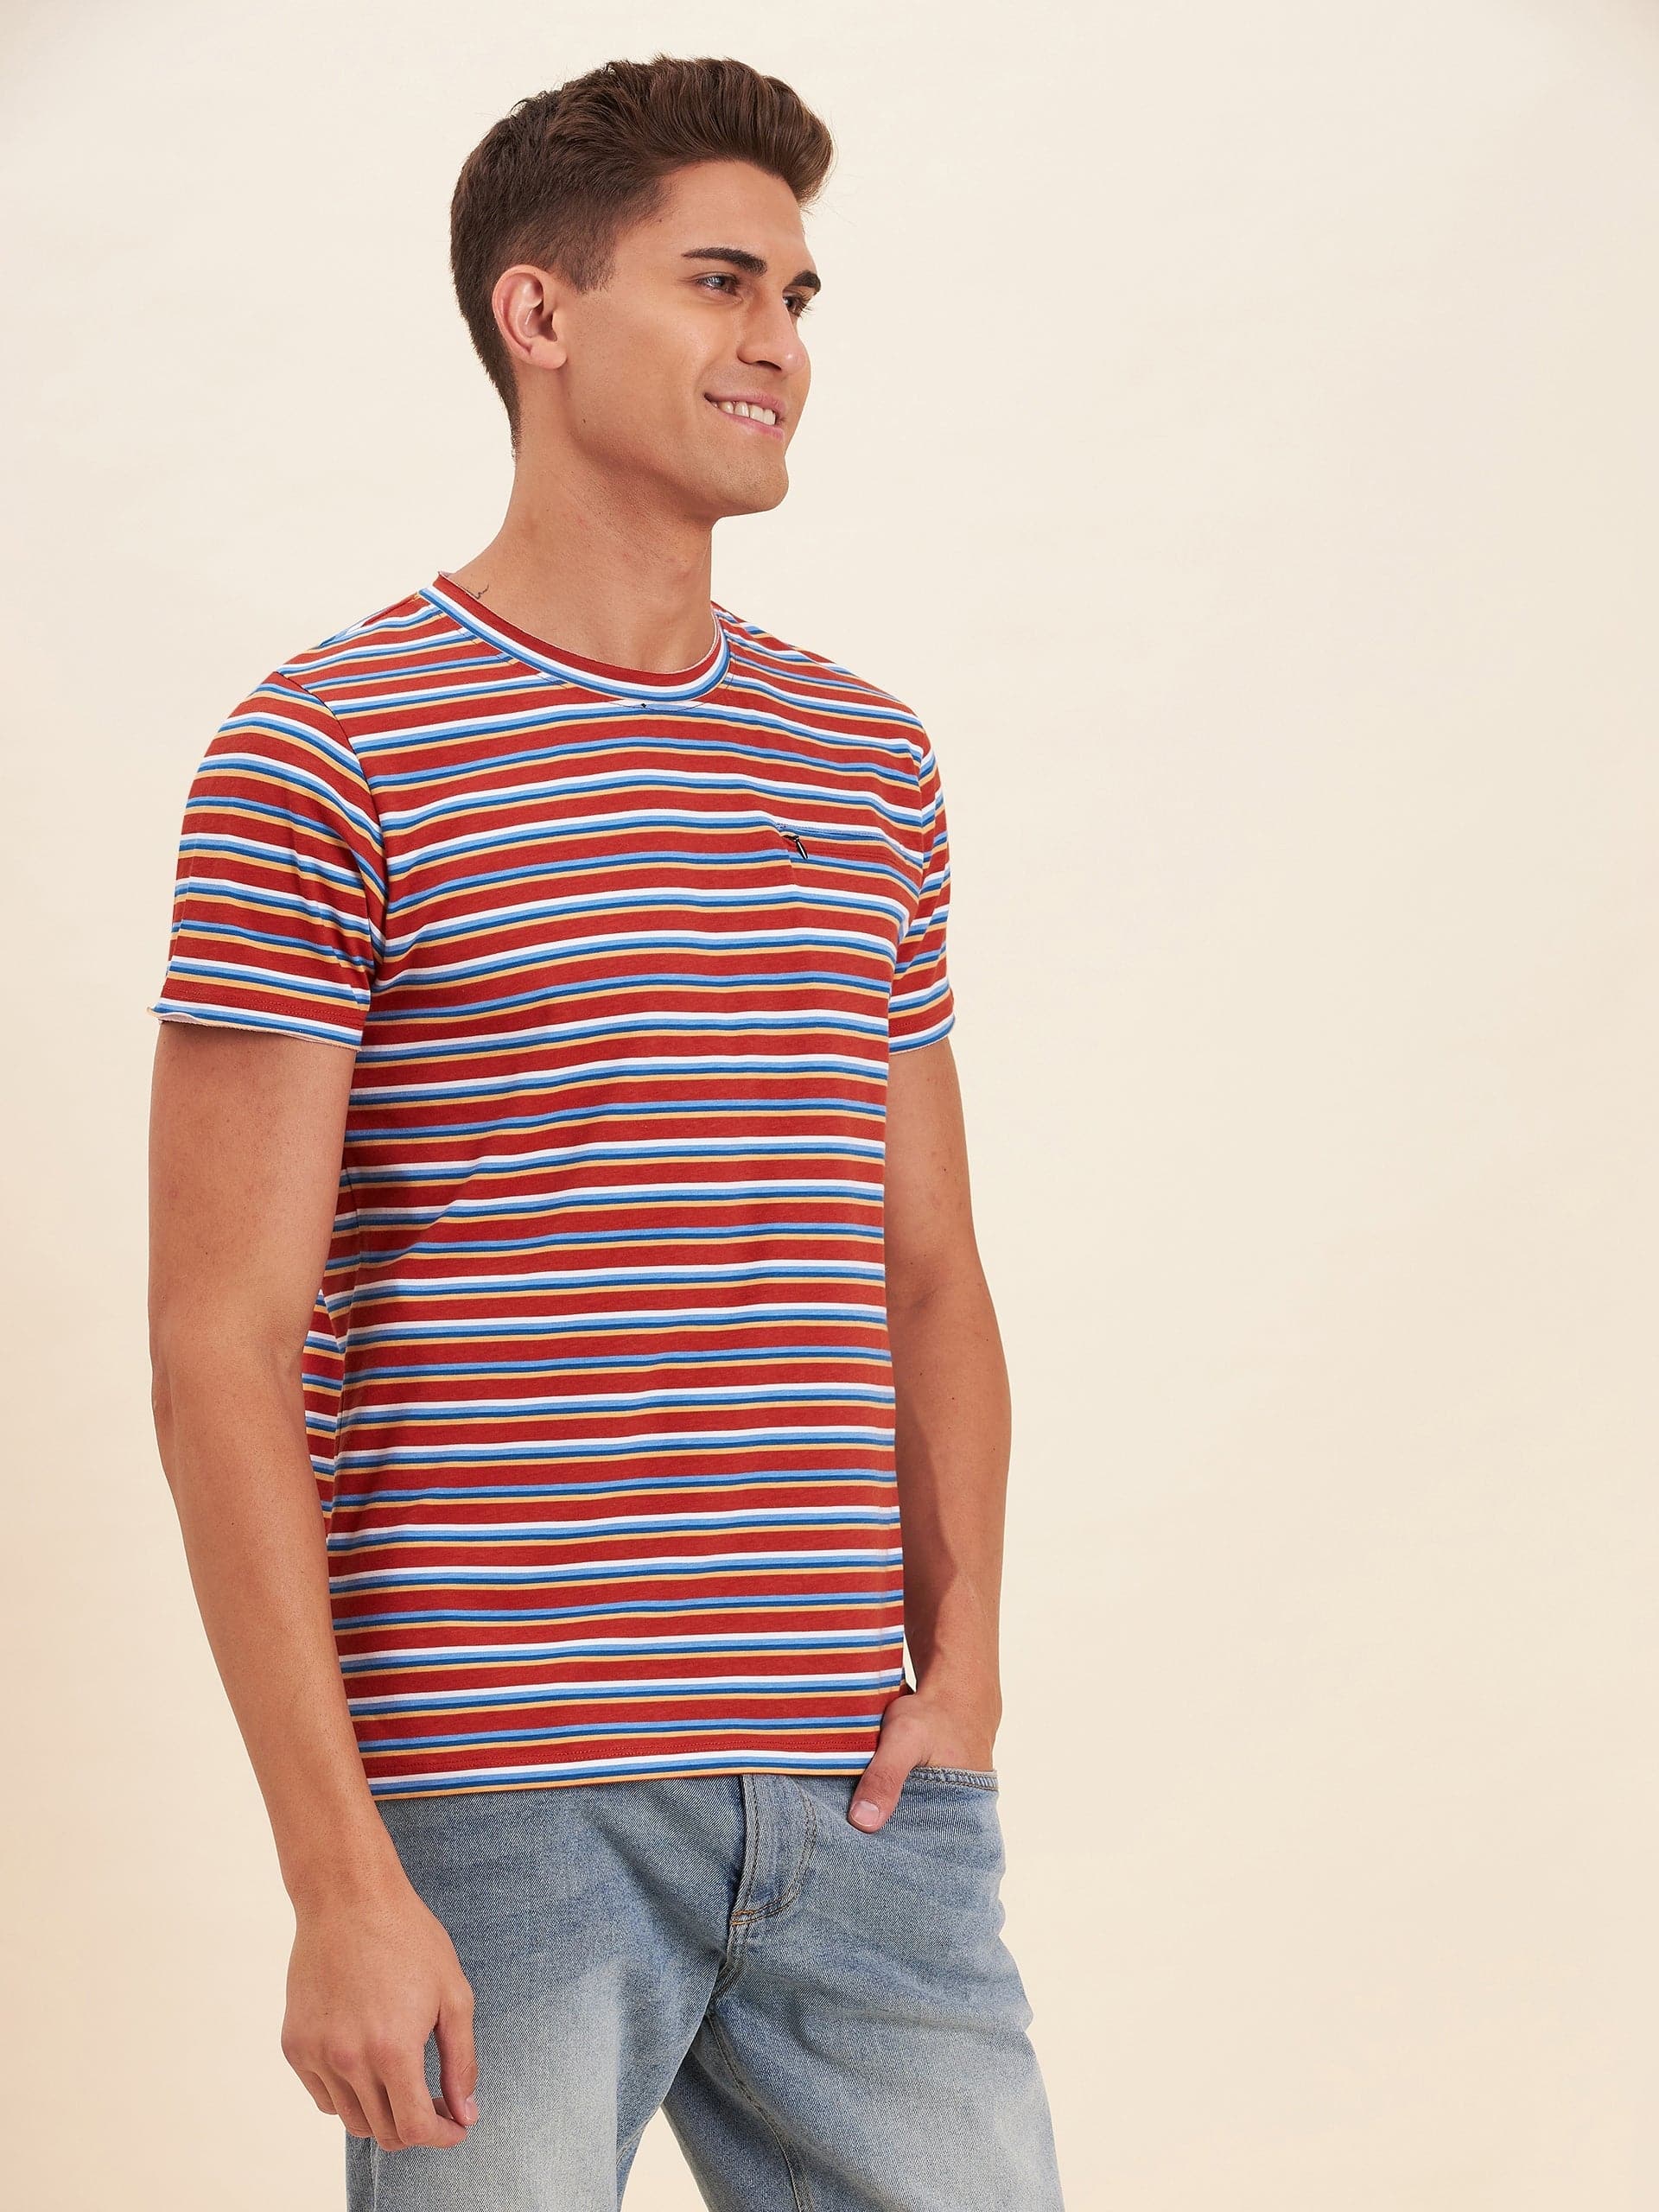 Men's Rust Multi Stripes Zipper Pocket Cotton T-Shirt - LYUSH-MASCLN